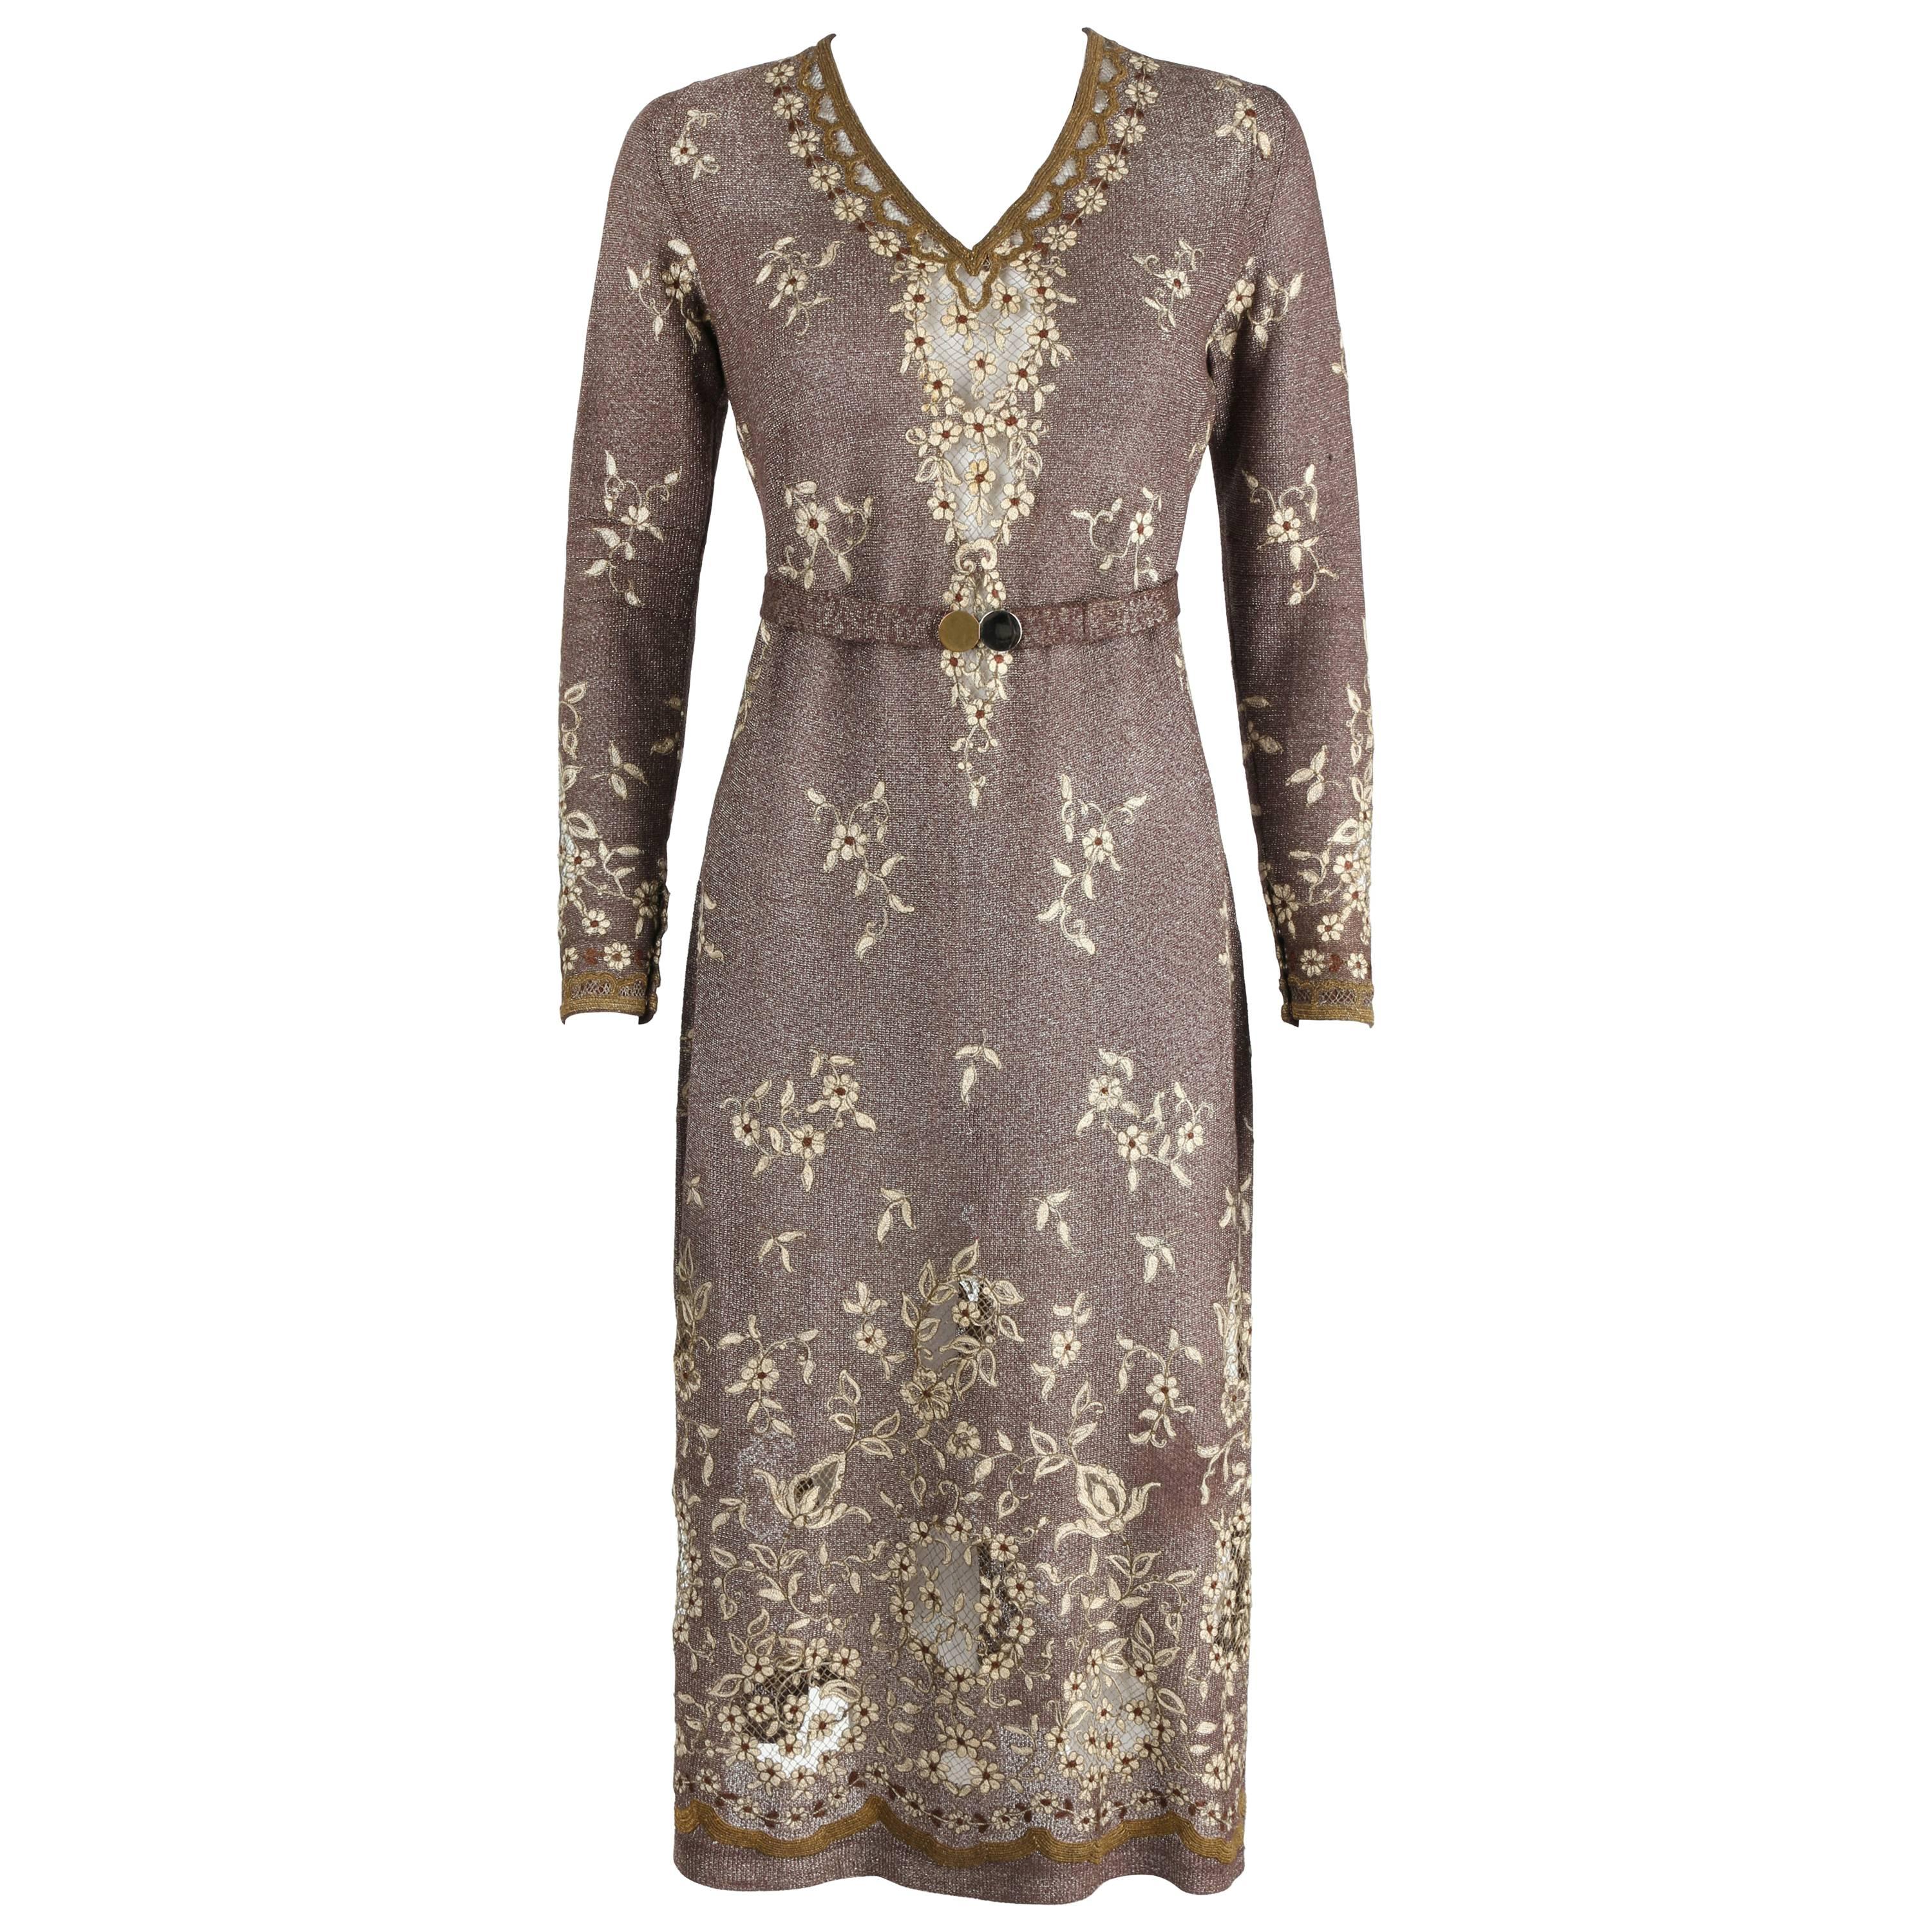 OOAK 1930's Parisian Haute Couture Brown Bronze Metallic Knit Embroidered Dress